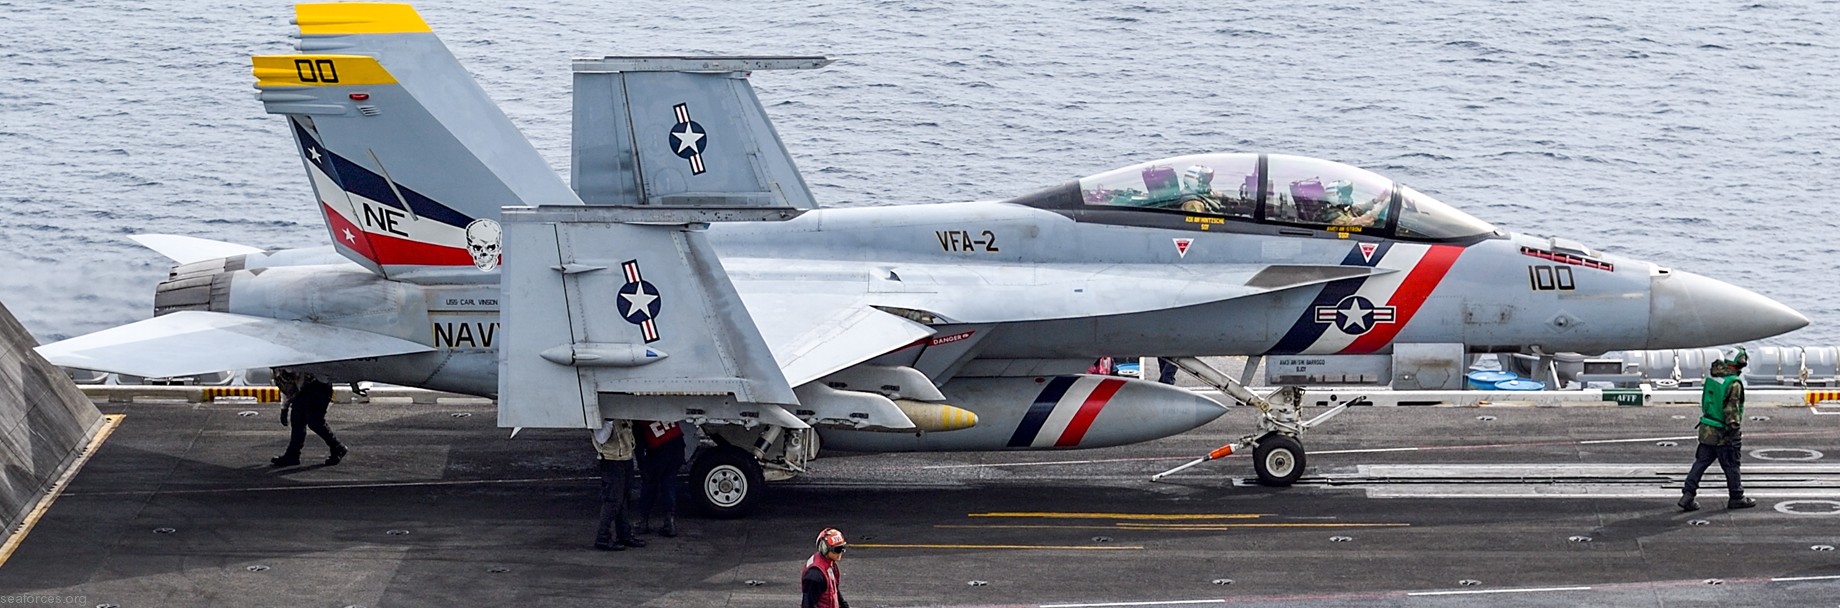 vfa-2 bounty hunters strike fighter squadron us navy f/a-18f super hornet carrier air wing cvw-2 uss carl vinson cvn-70 42